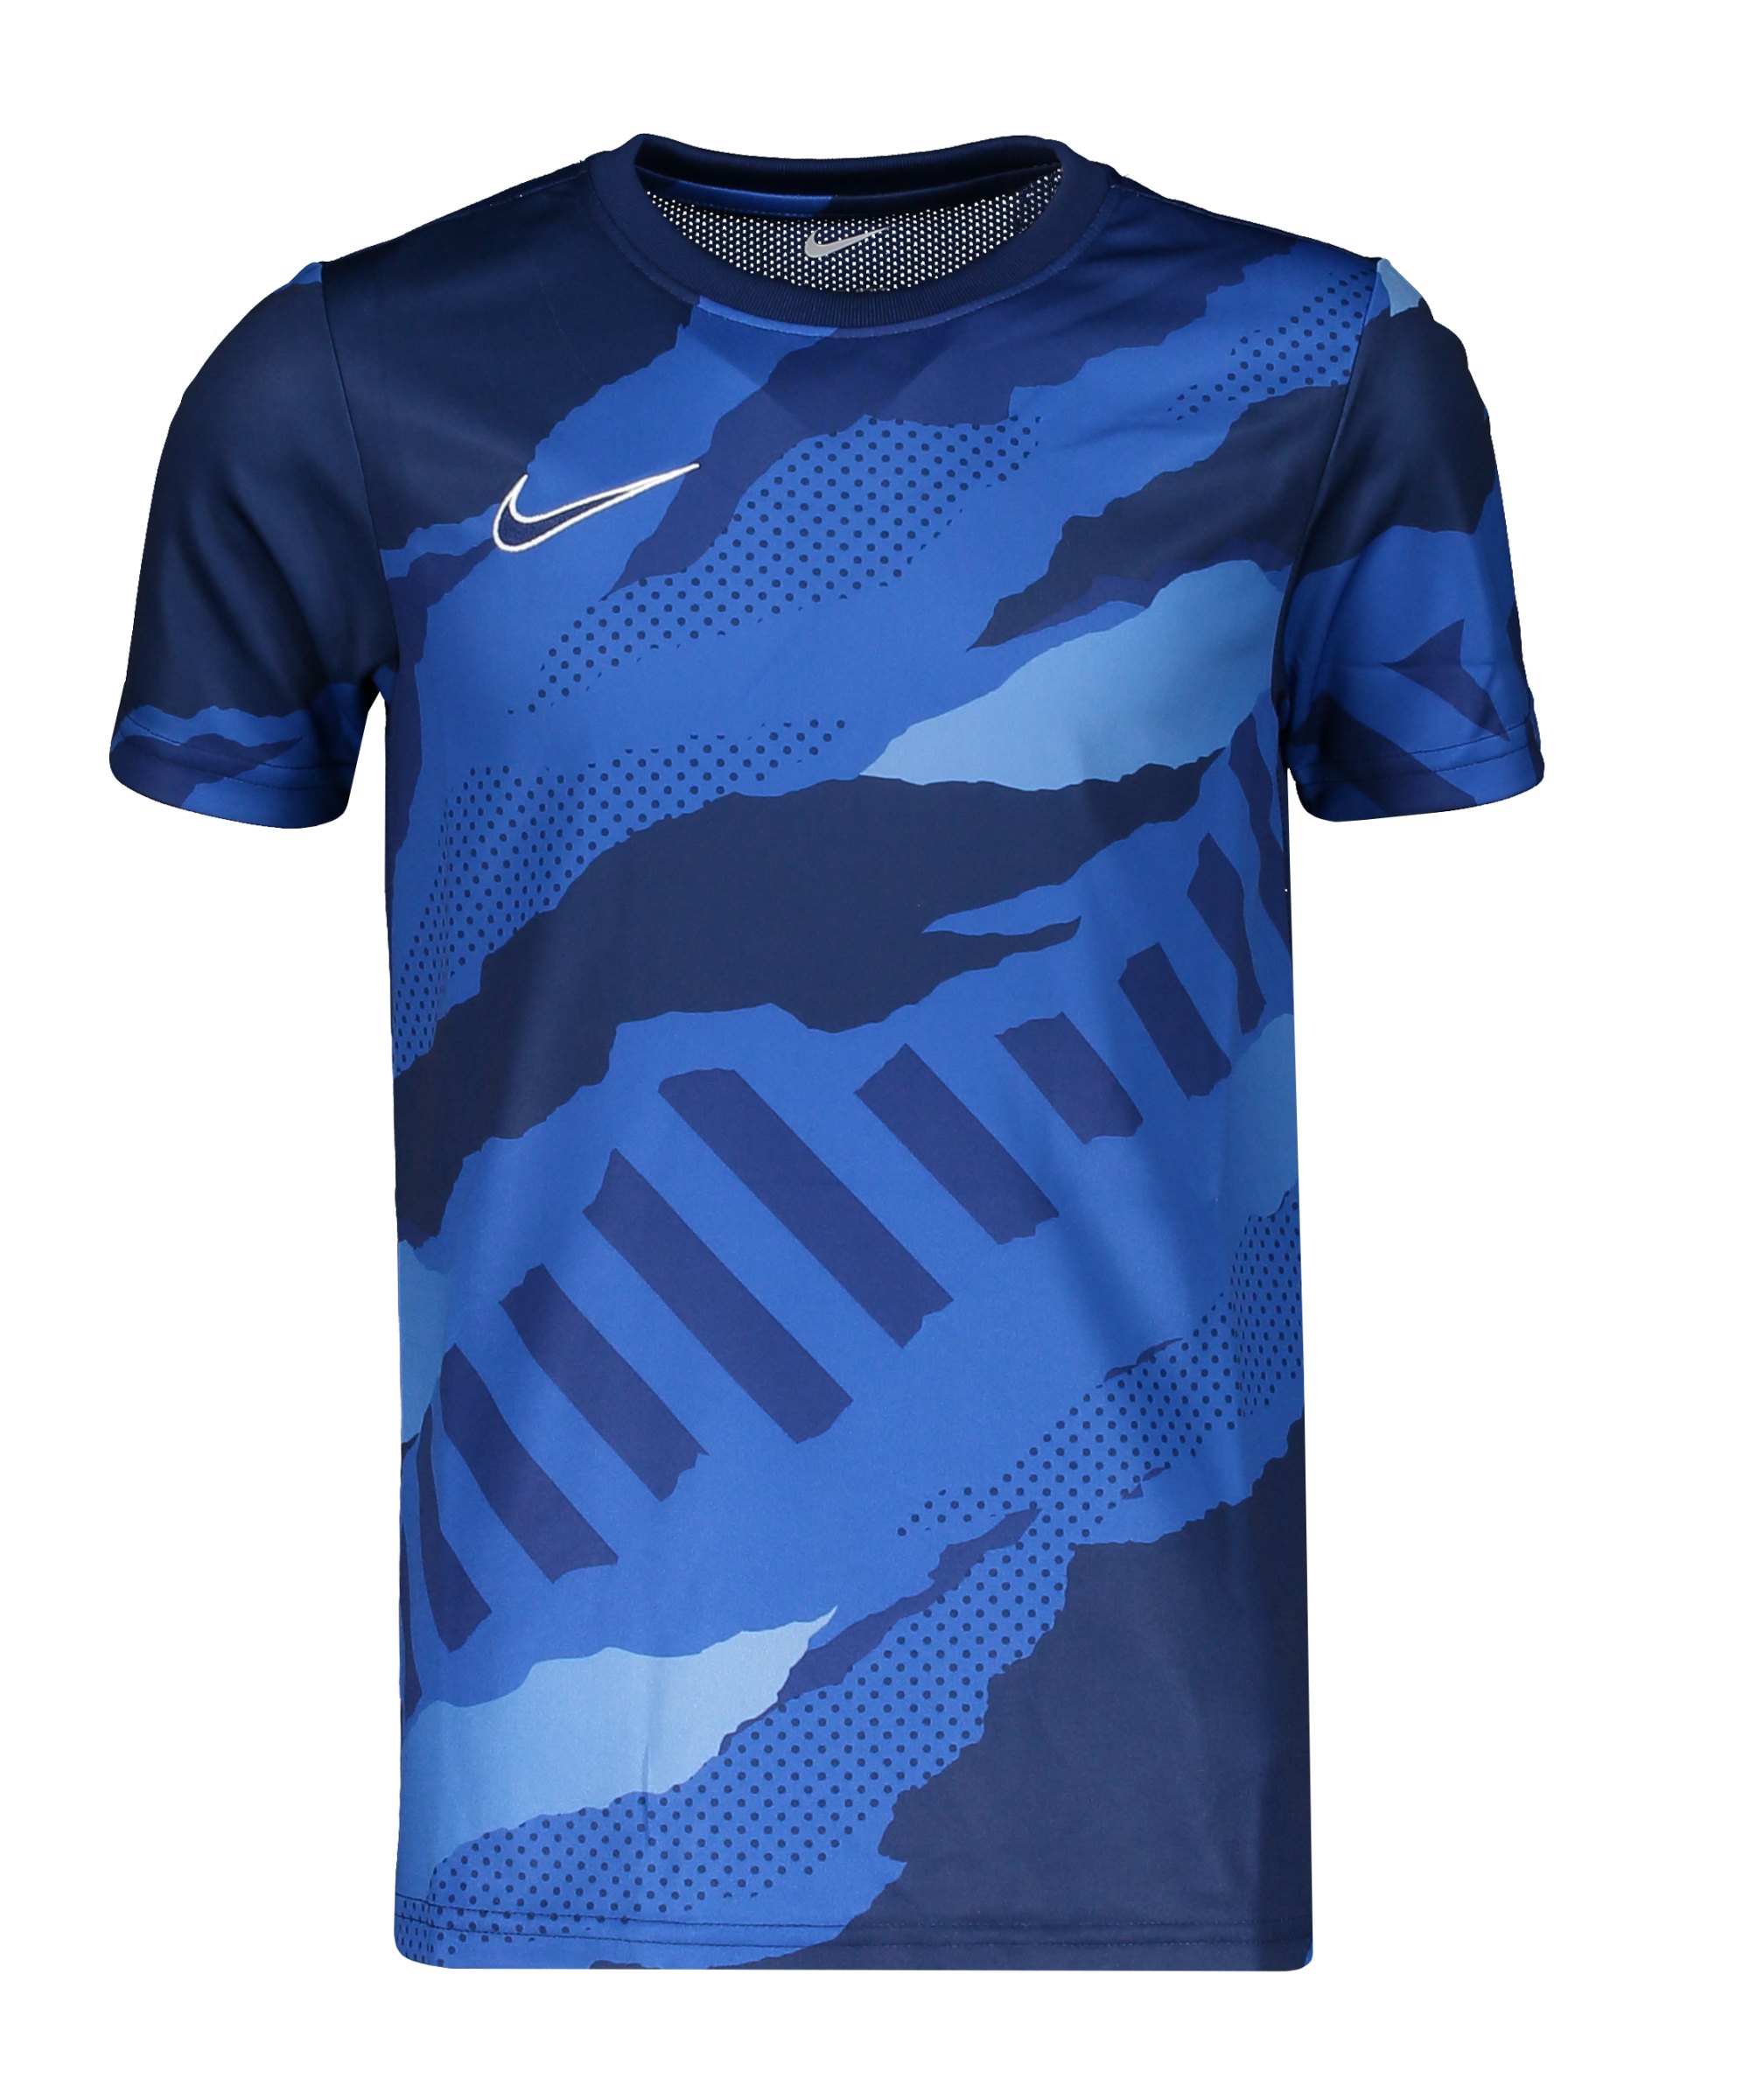 Nike GX Trainingsshirt Kids Blau Weiss F492 - blau